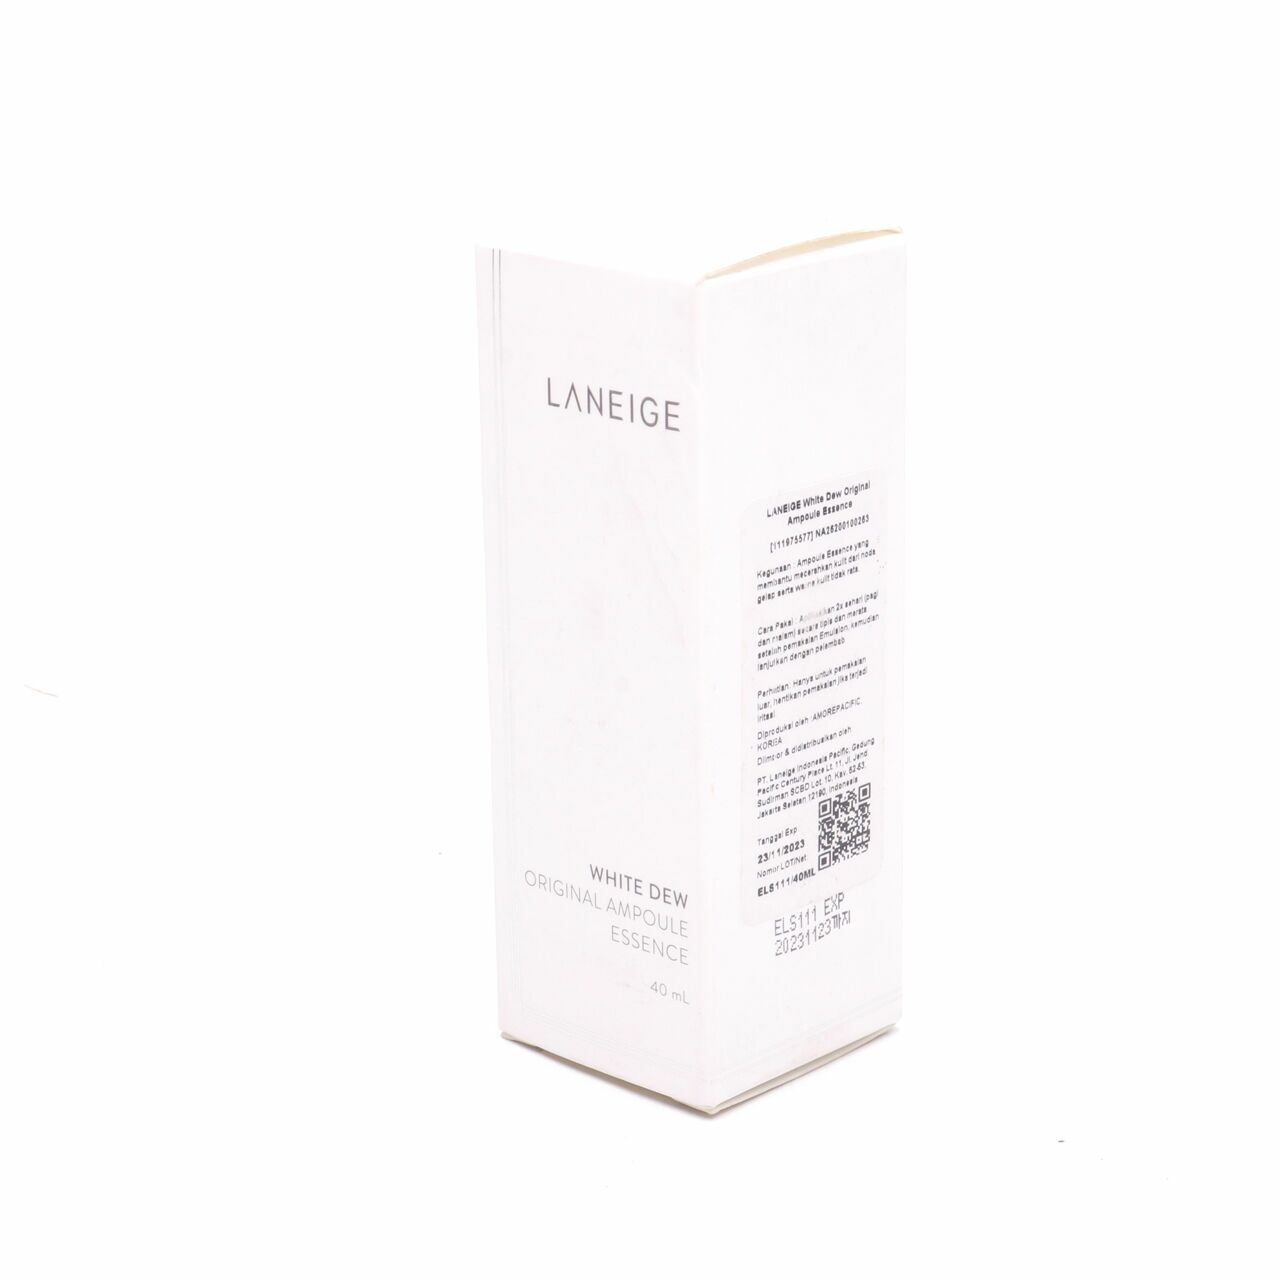 Laneige White Dew Original Ampoule Essence Skin Care